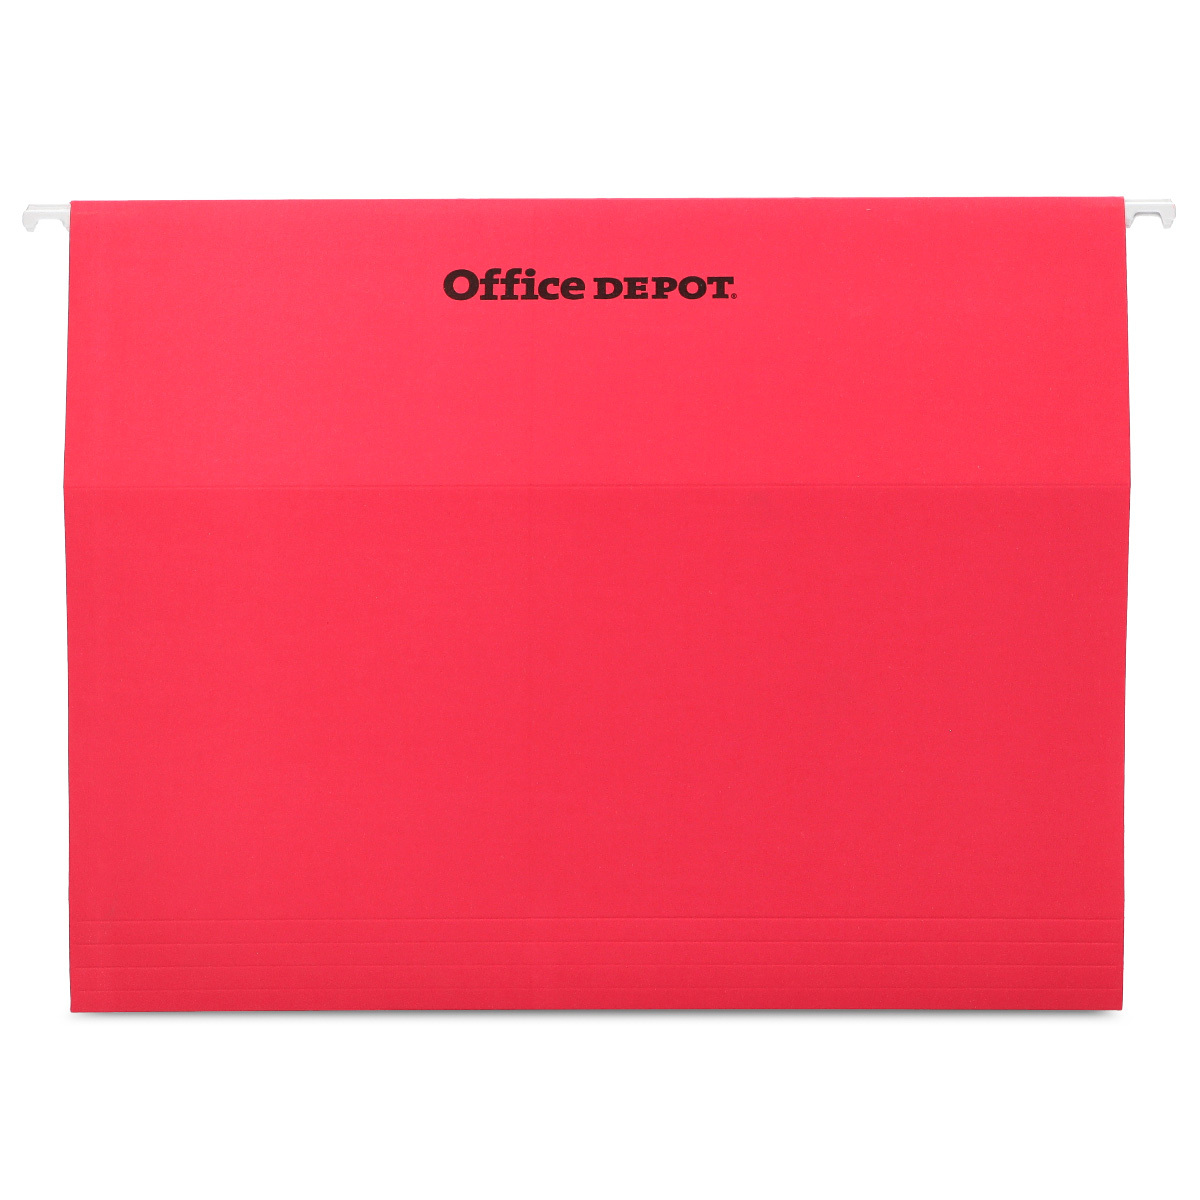 Folders Carta Colgantes Office Depot Colore surtidos 25 piezas | Office  Depot Mexico